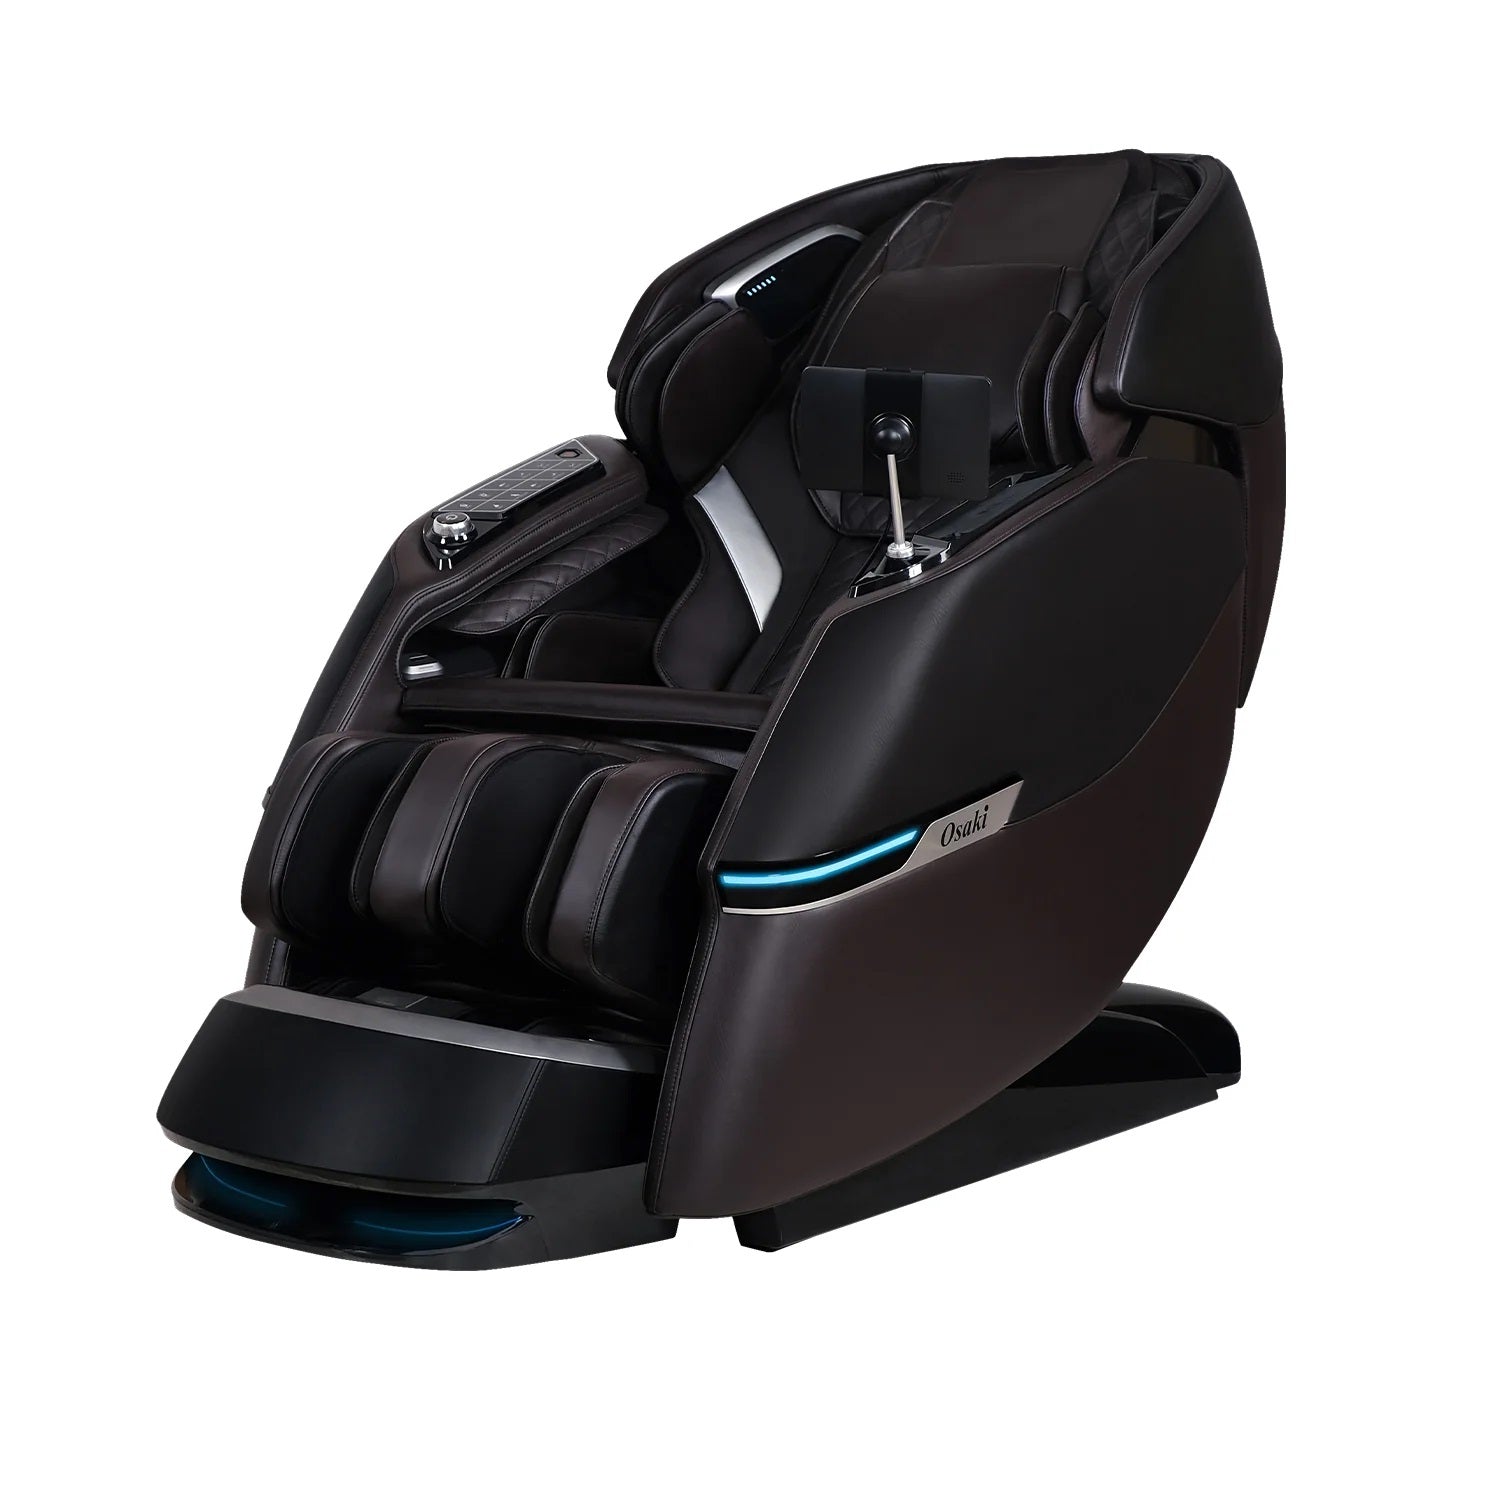 Osaki OS-Ai Vivo 4D+2D Massage Chair